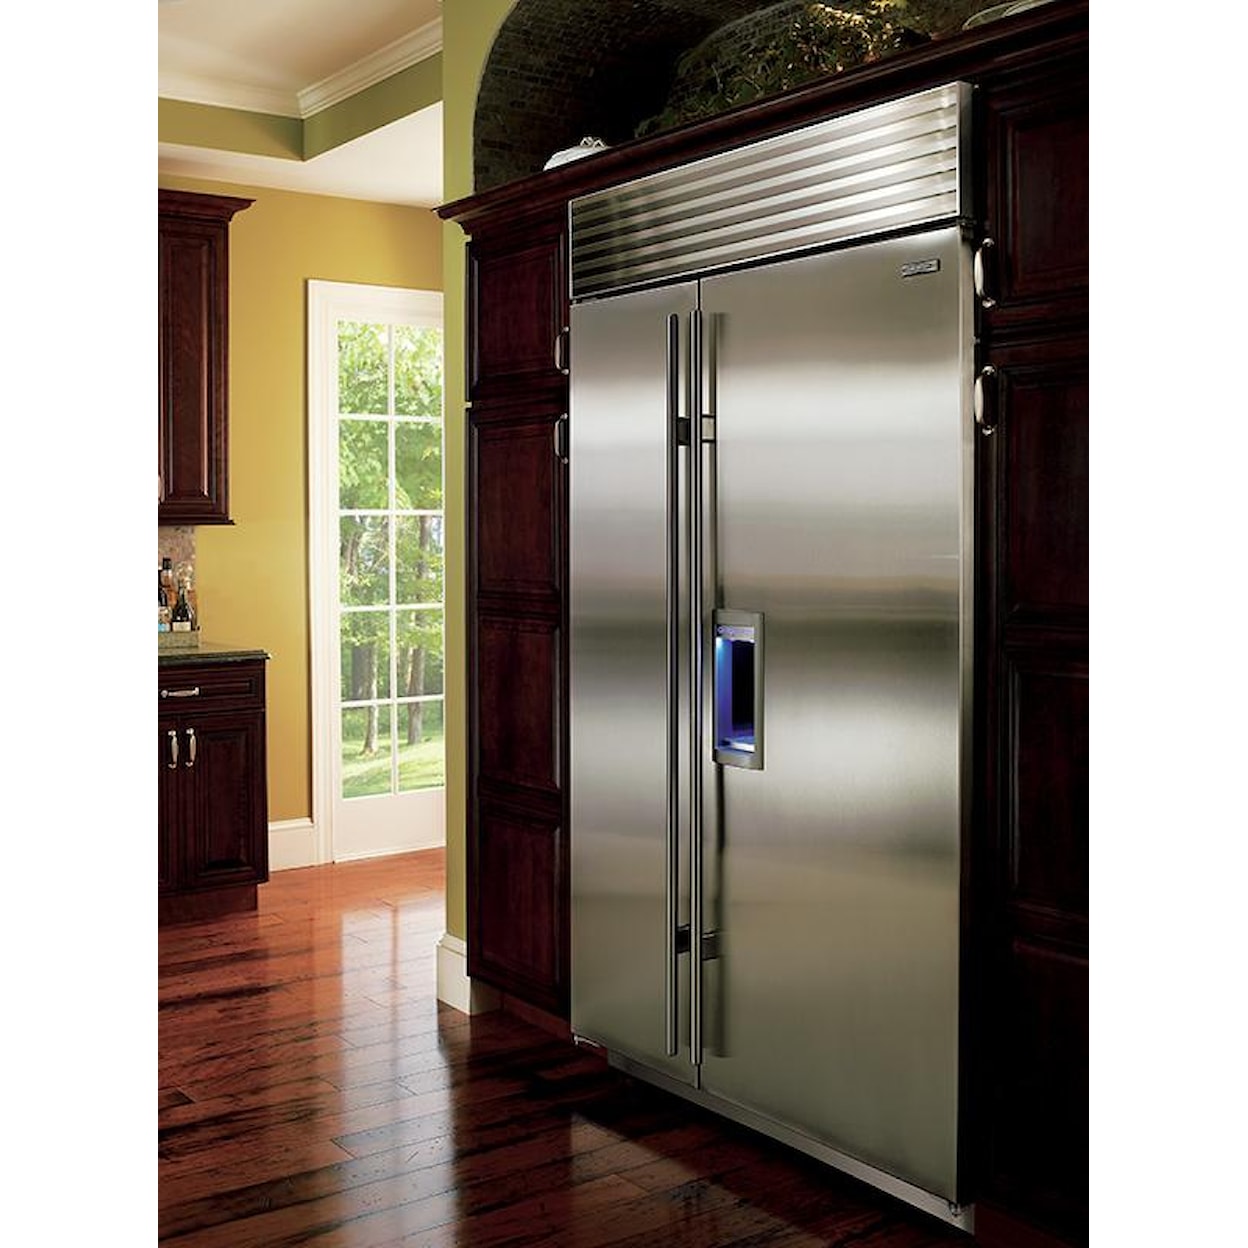 Sub-Zero Built-In Refrigeration Side-by-Side Refrigerator